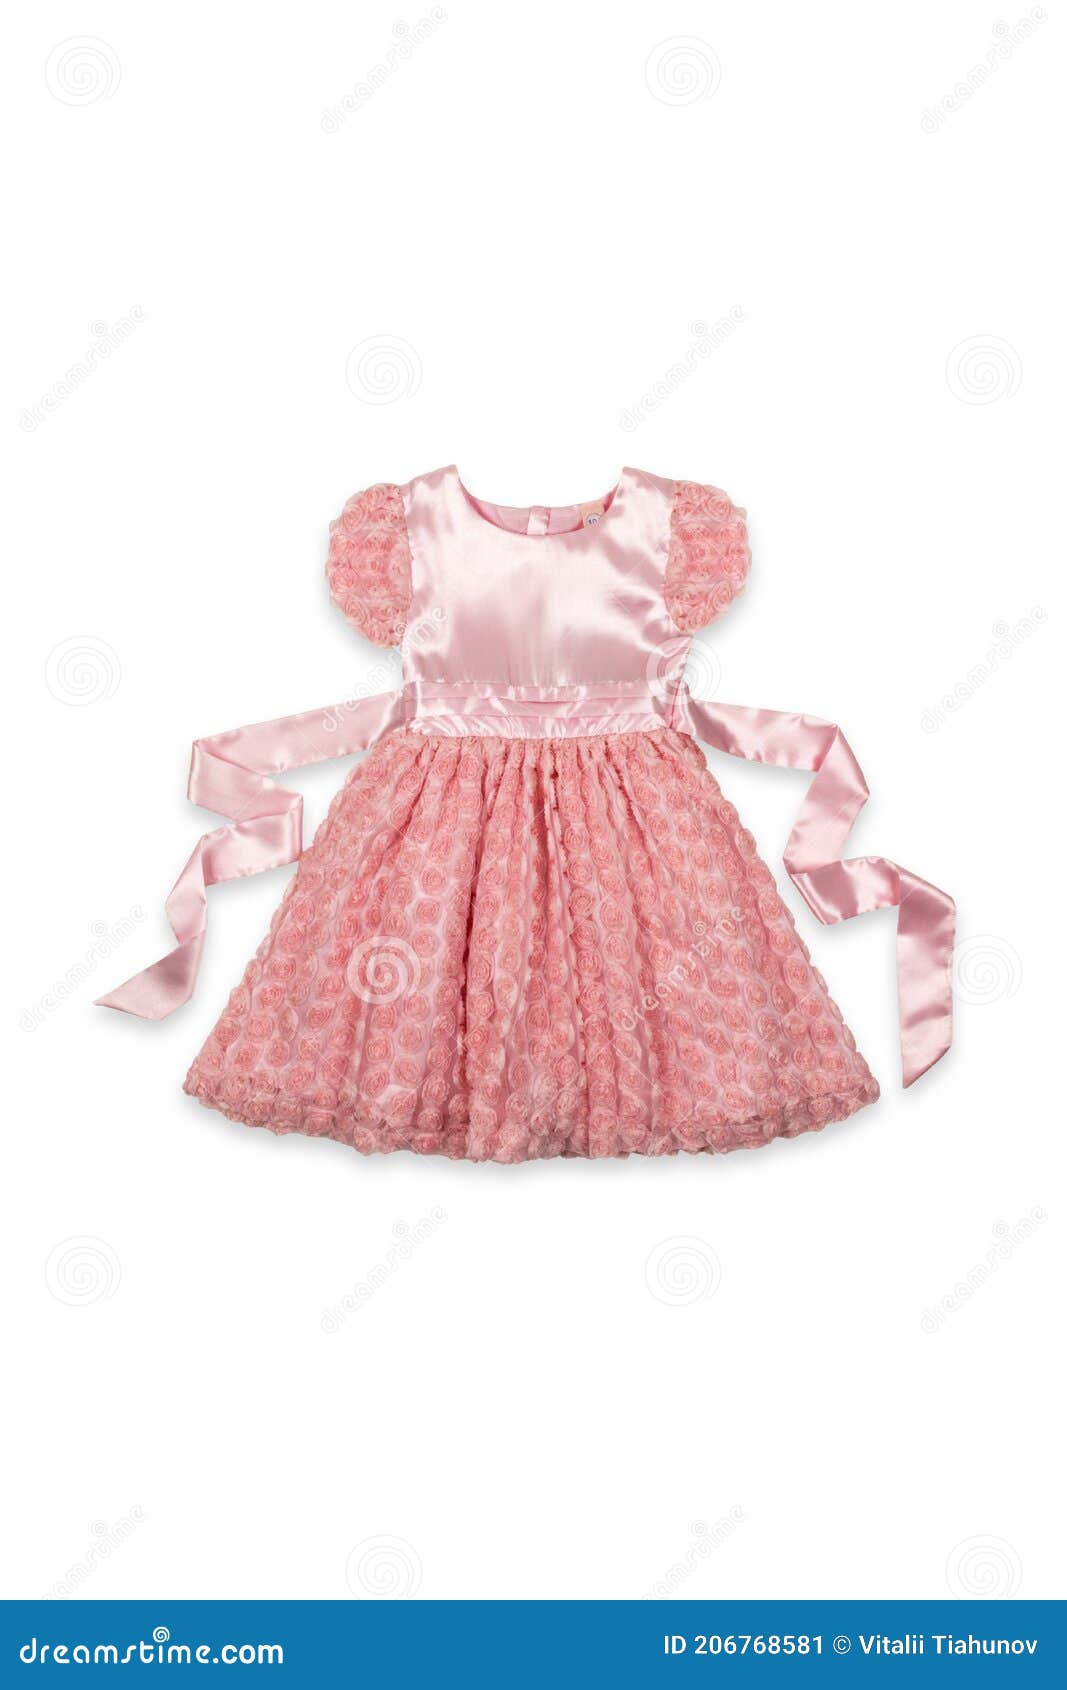 Baby Dress on a White Background Stock Image - Image of fashion ...